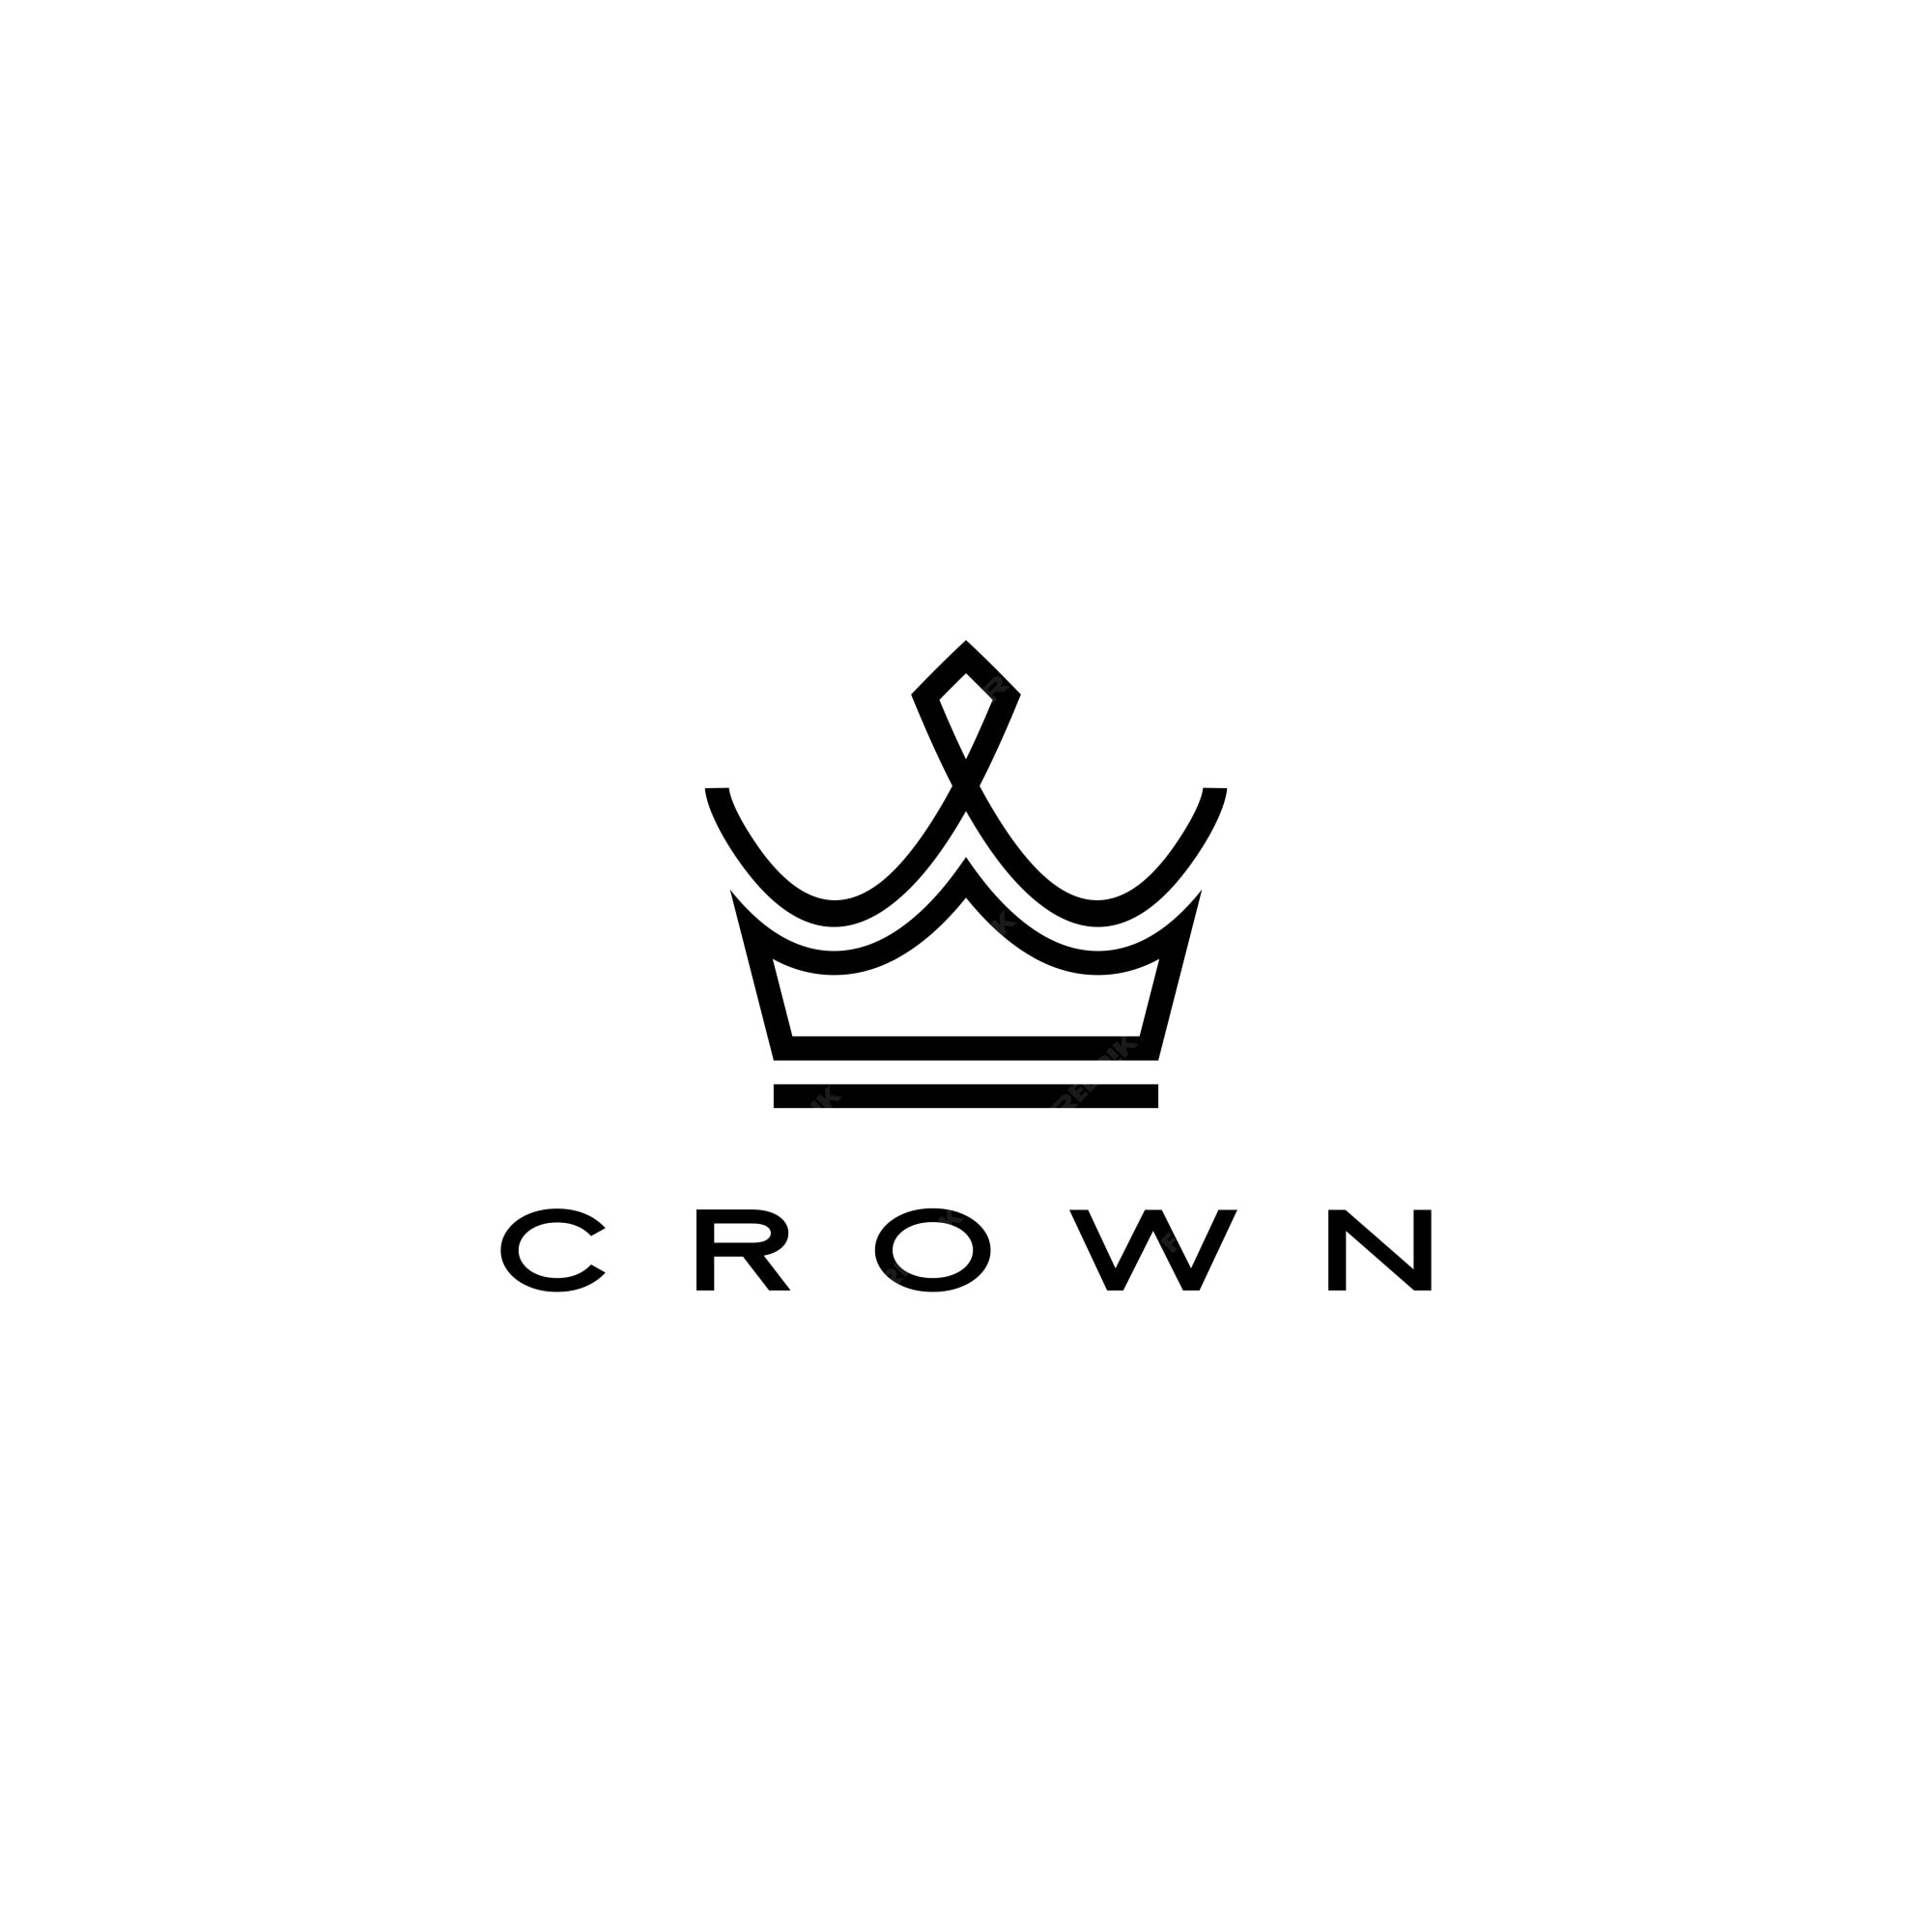 Premium Vector | Crown logo icon illustration